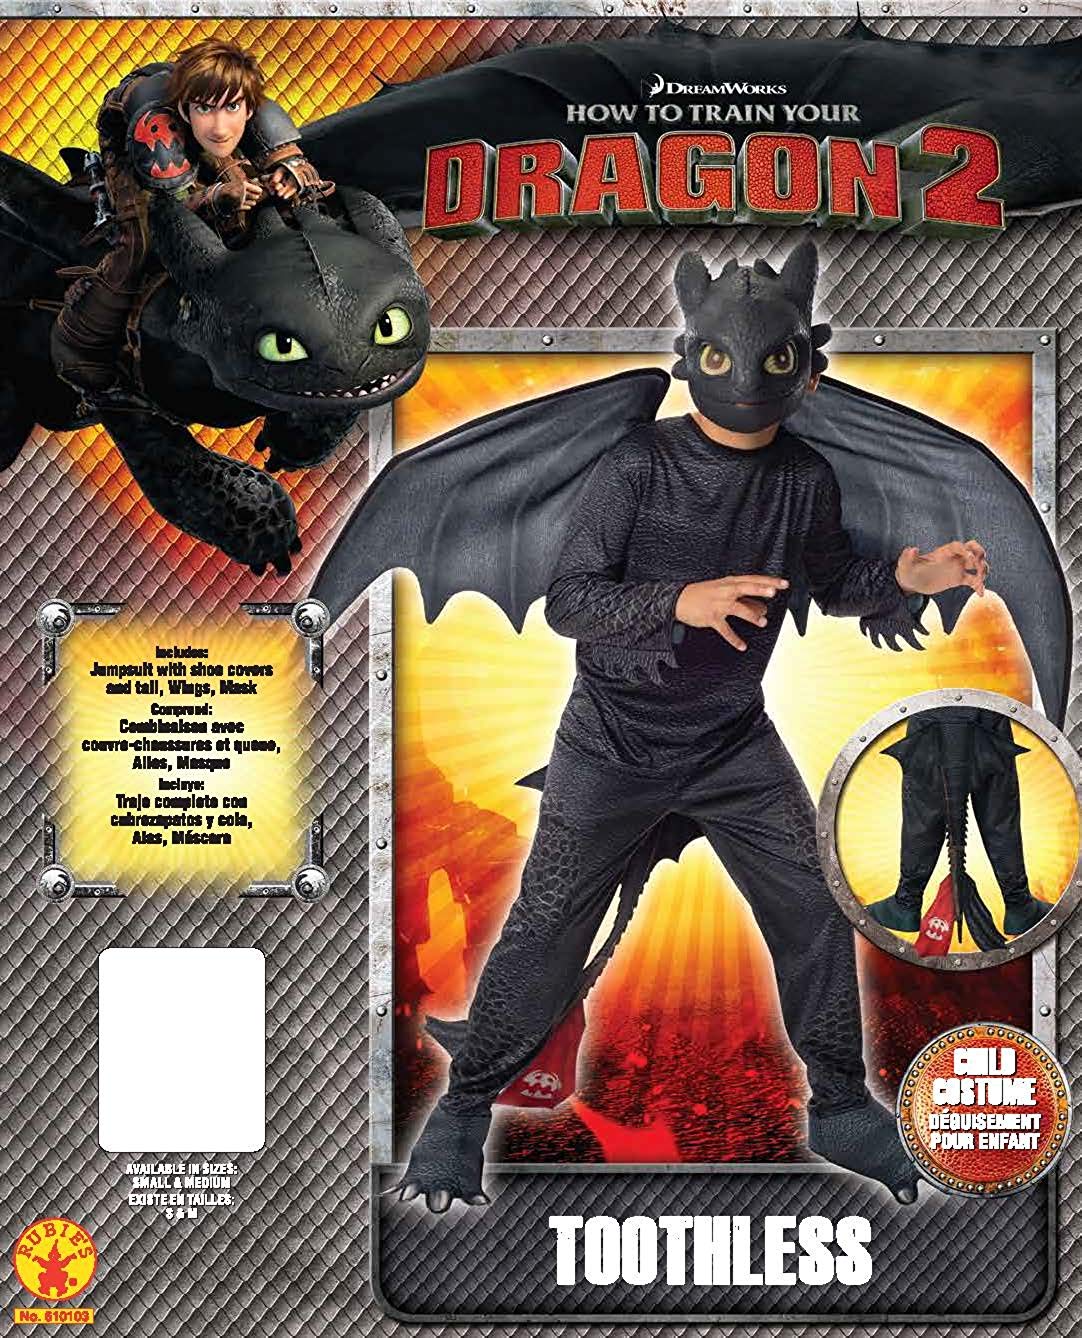 Toothless Night Fury Boys Fancy Dress Train Your Dragon 2 Kids Childrens Costume 